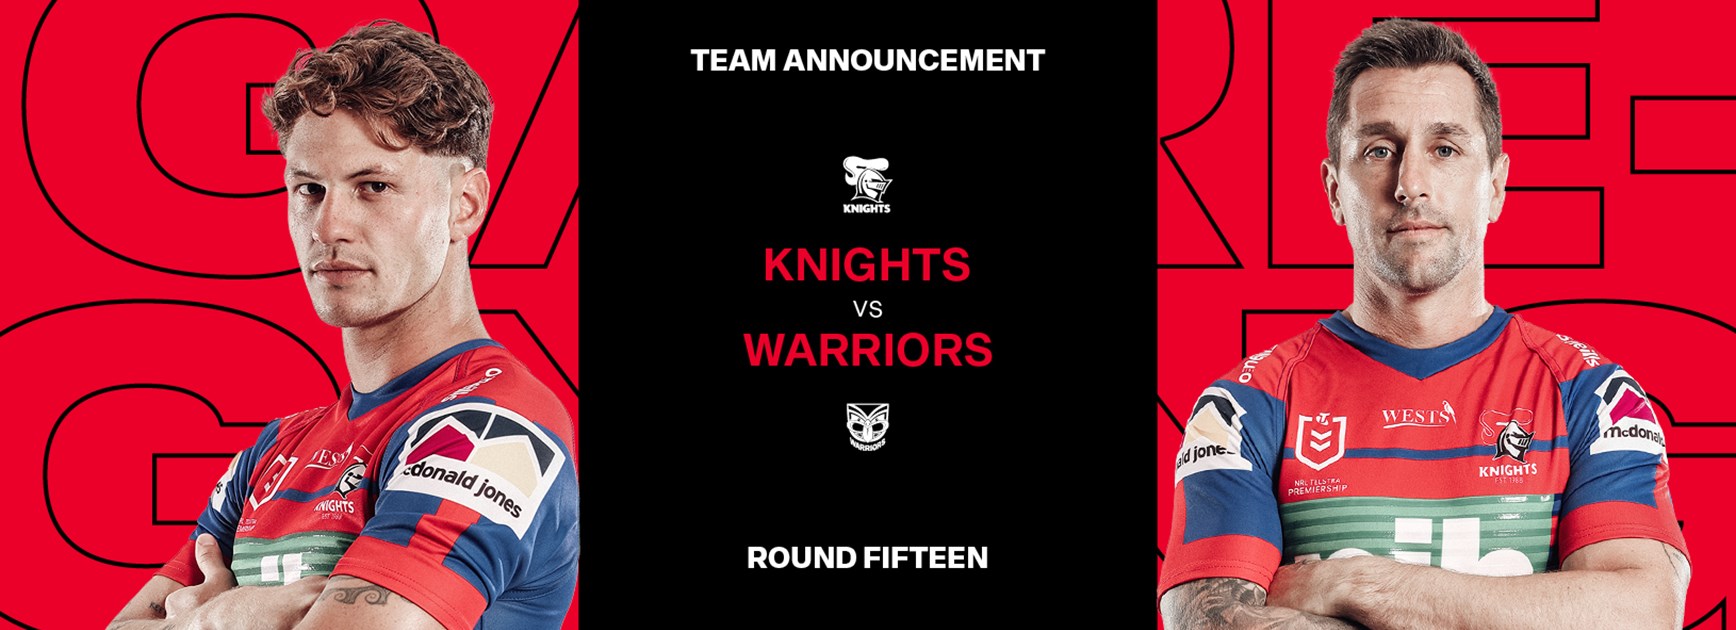 Knights v Warriors Round 15 NRL team list